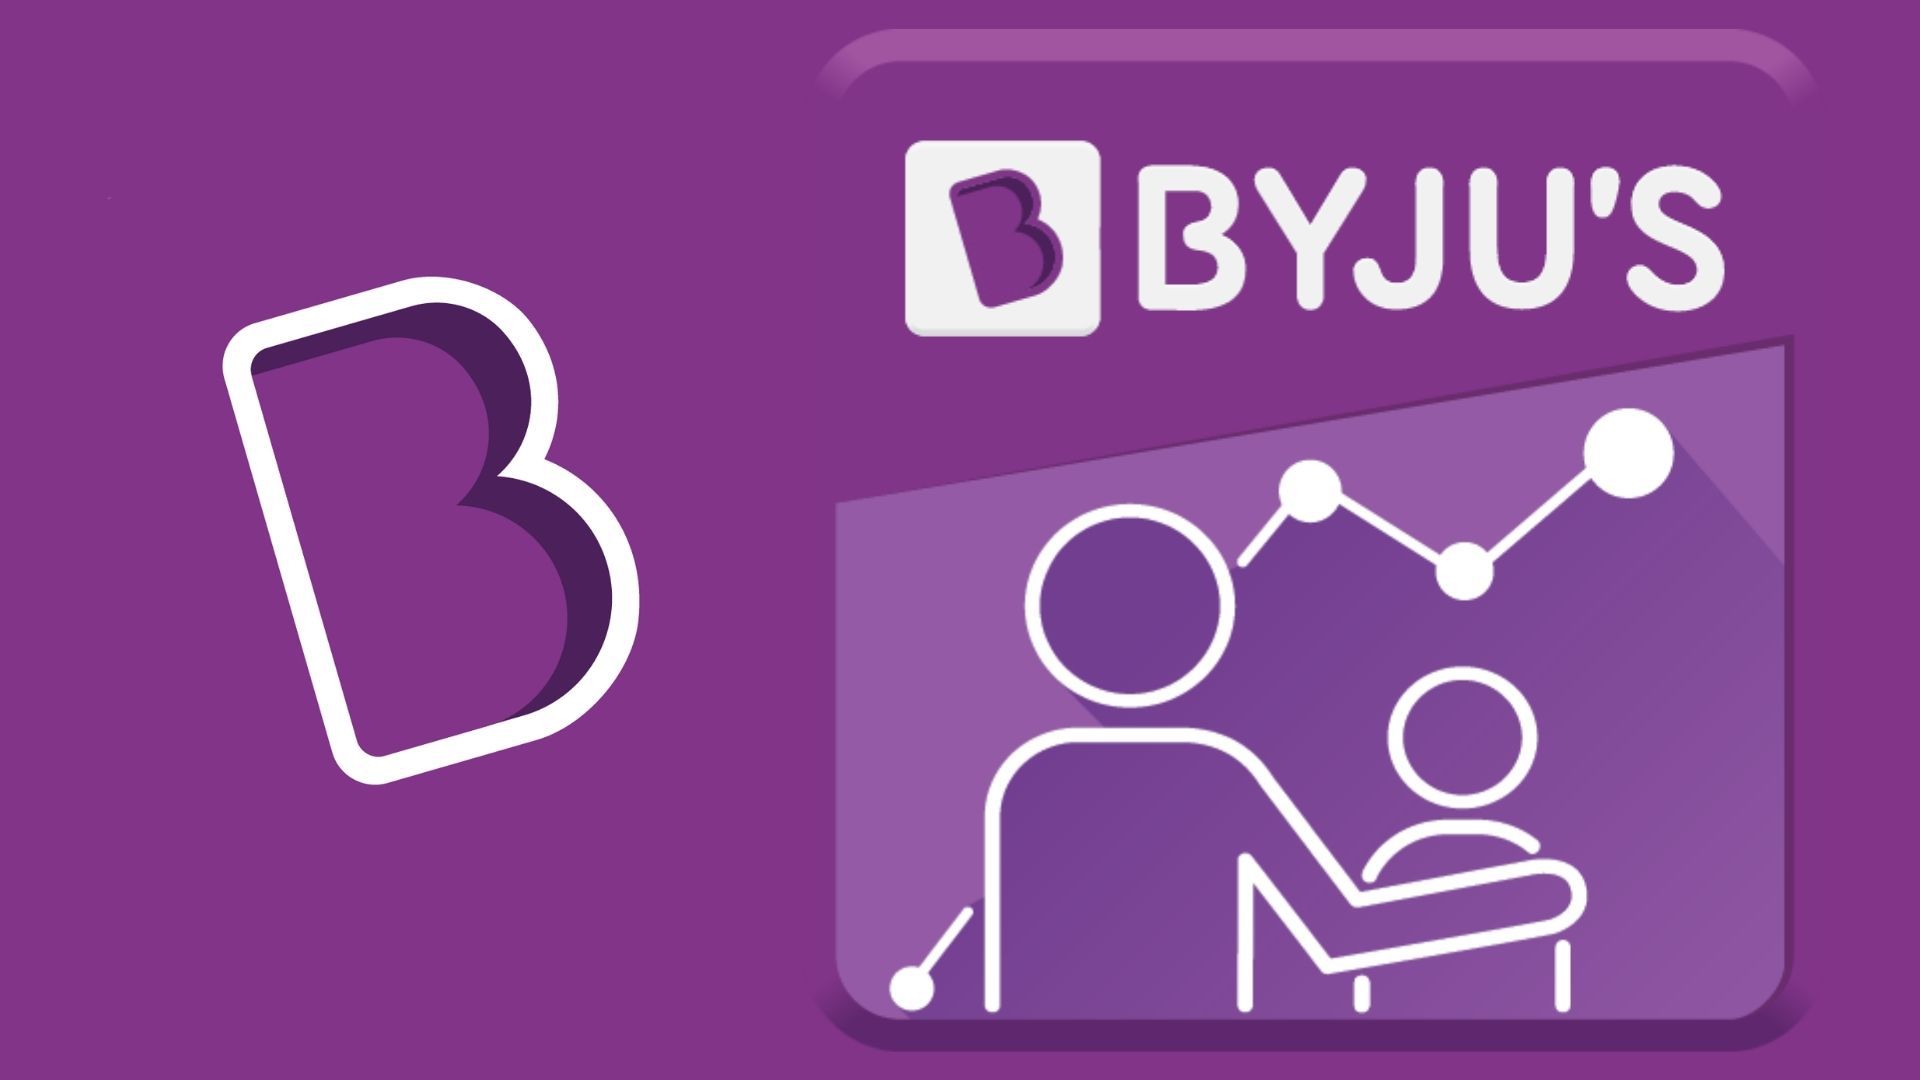 Business Model Of Byju's - How Byju's Makes Money? | Marketing91